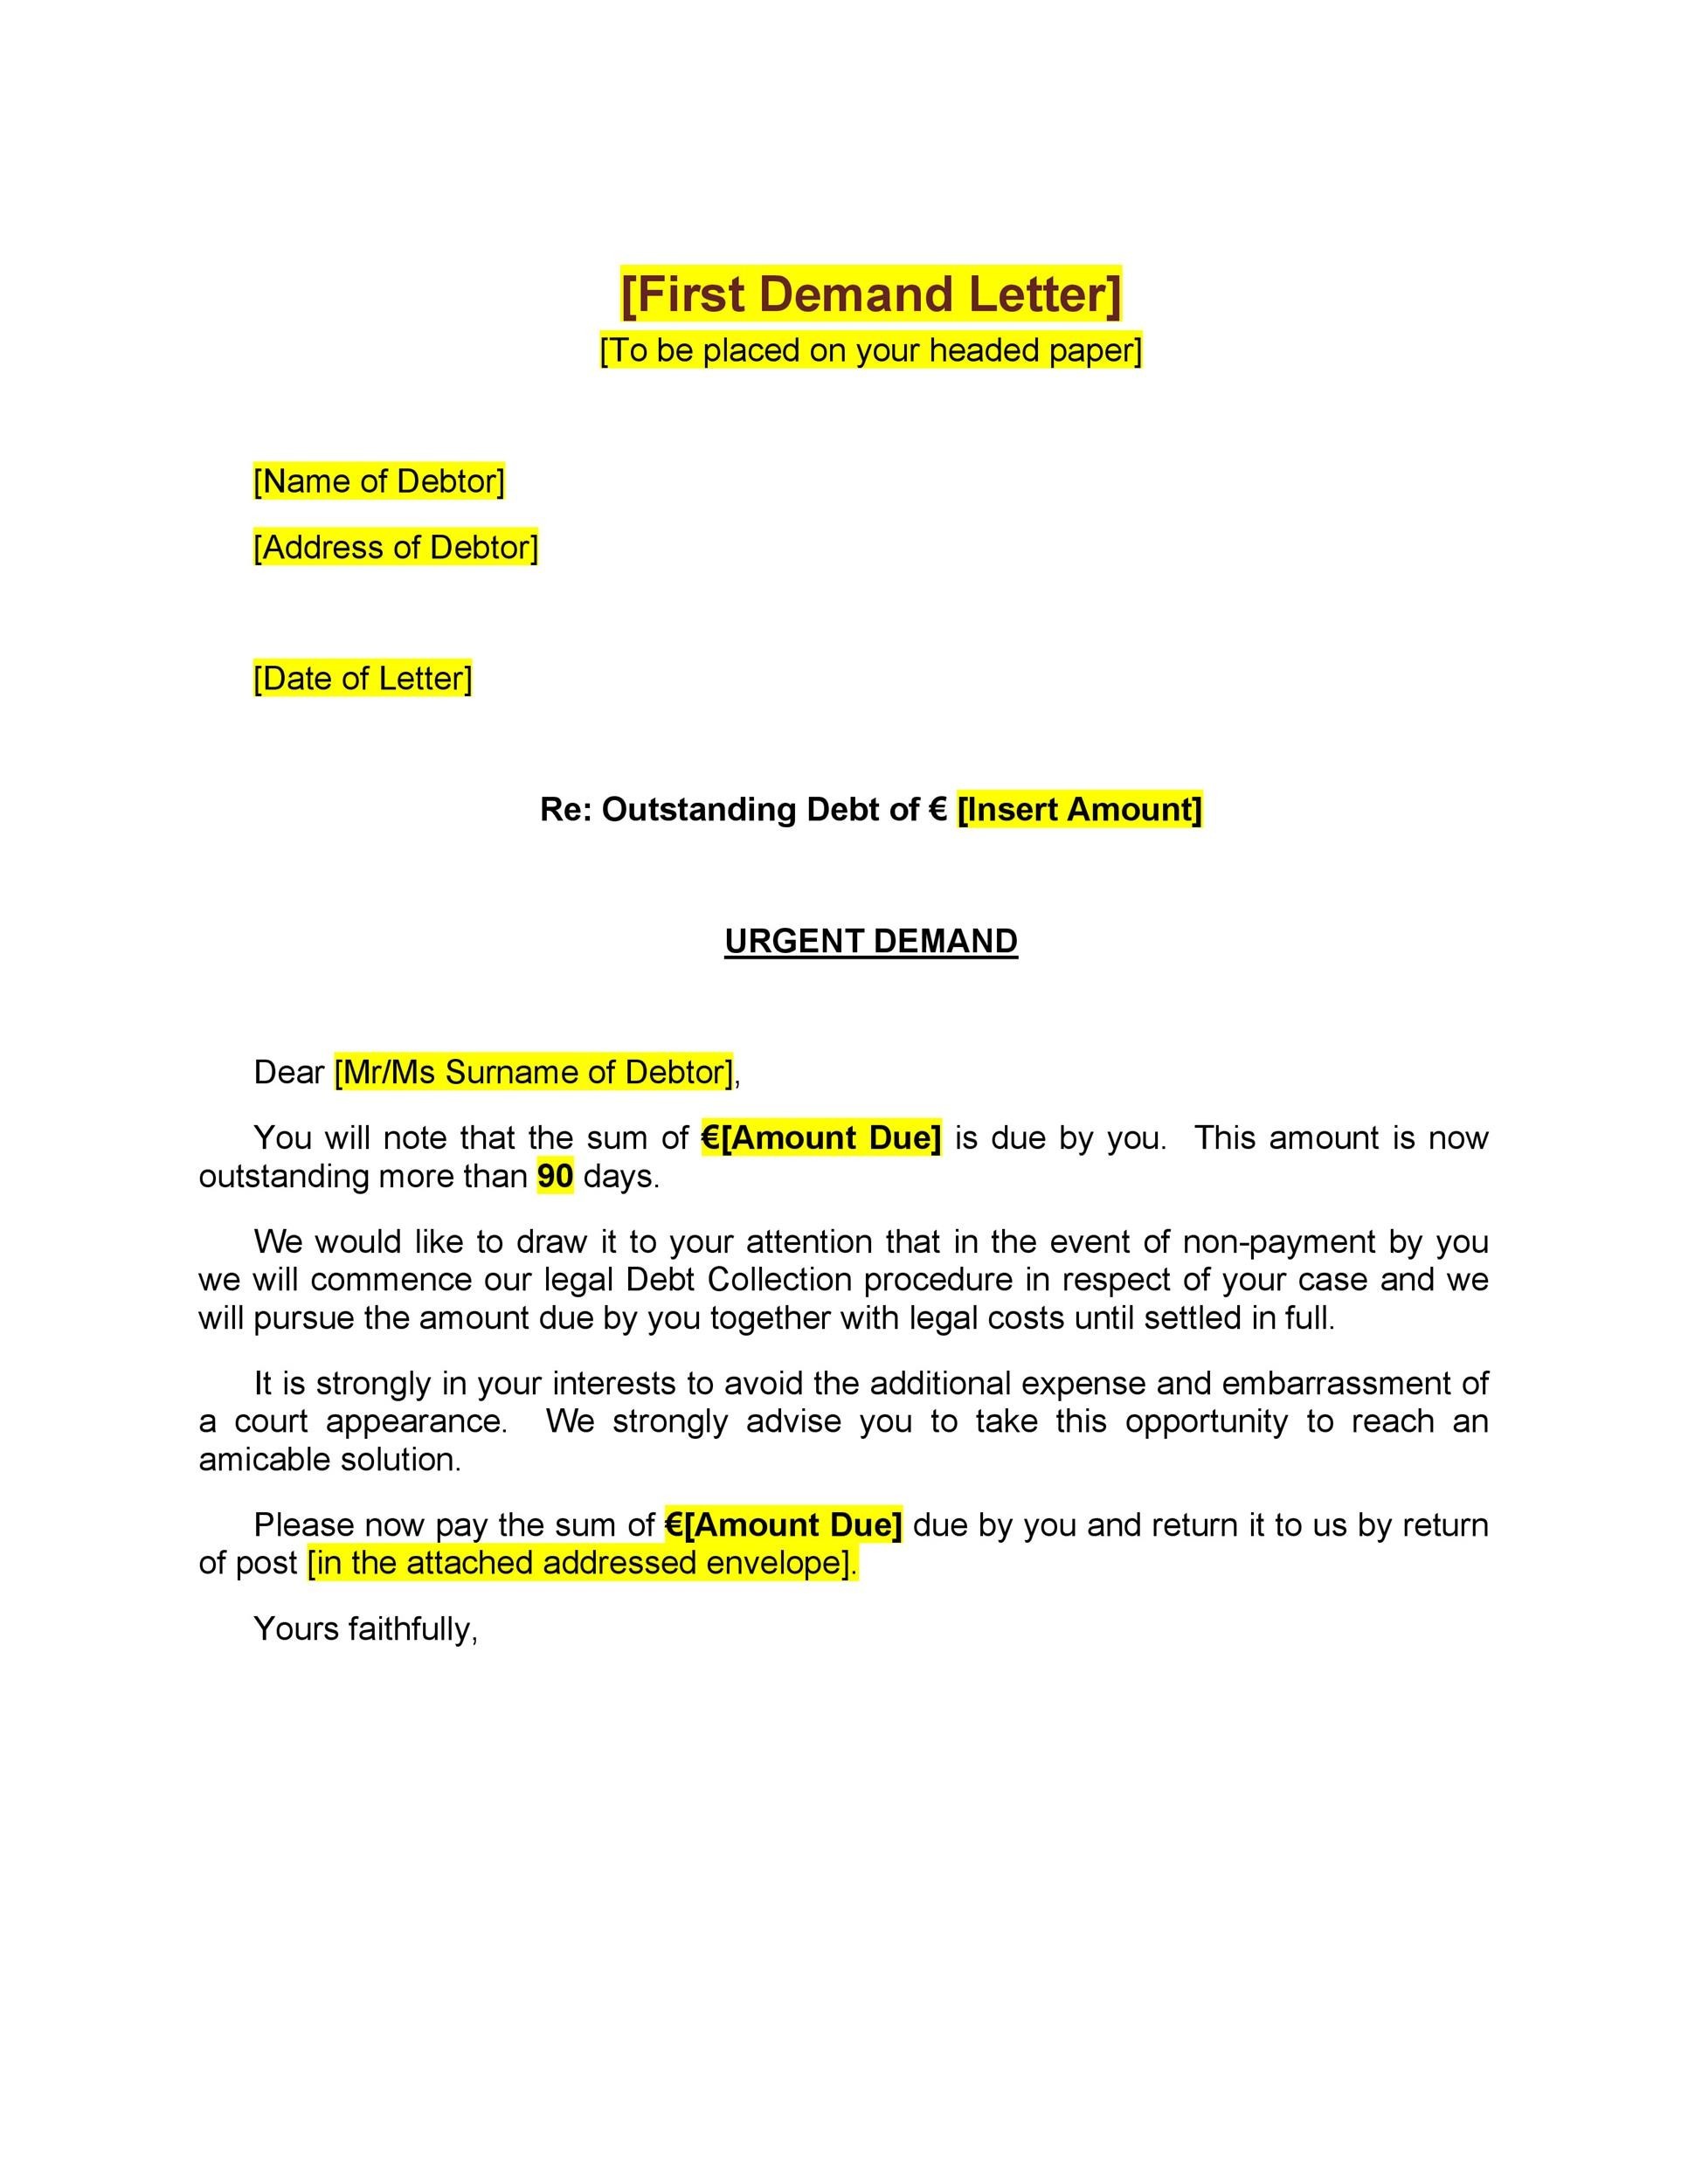 40 Best Demand Letter Templates (Free Samples) ᐅ TemplateLab